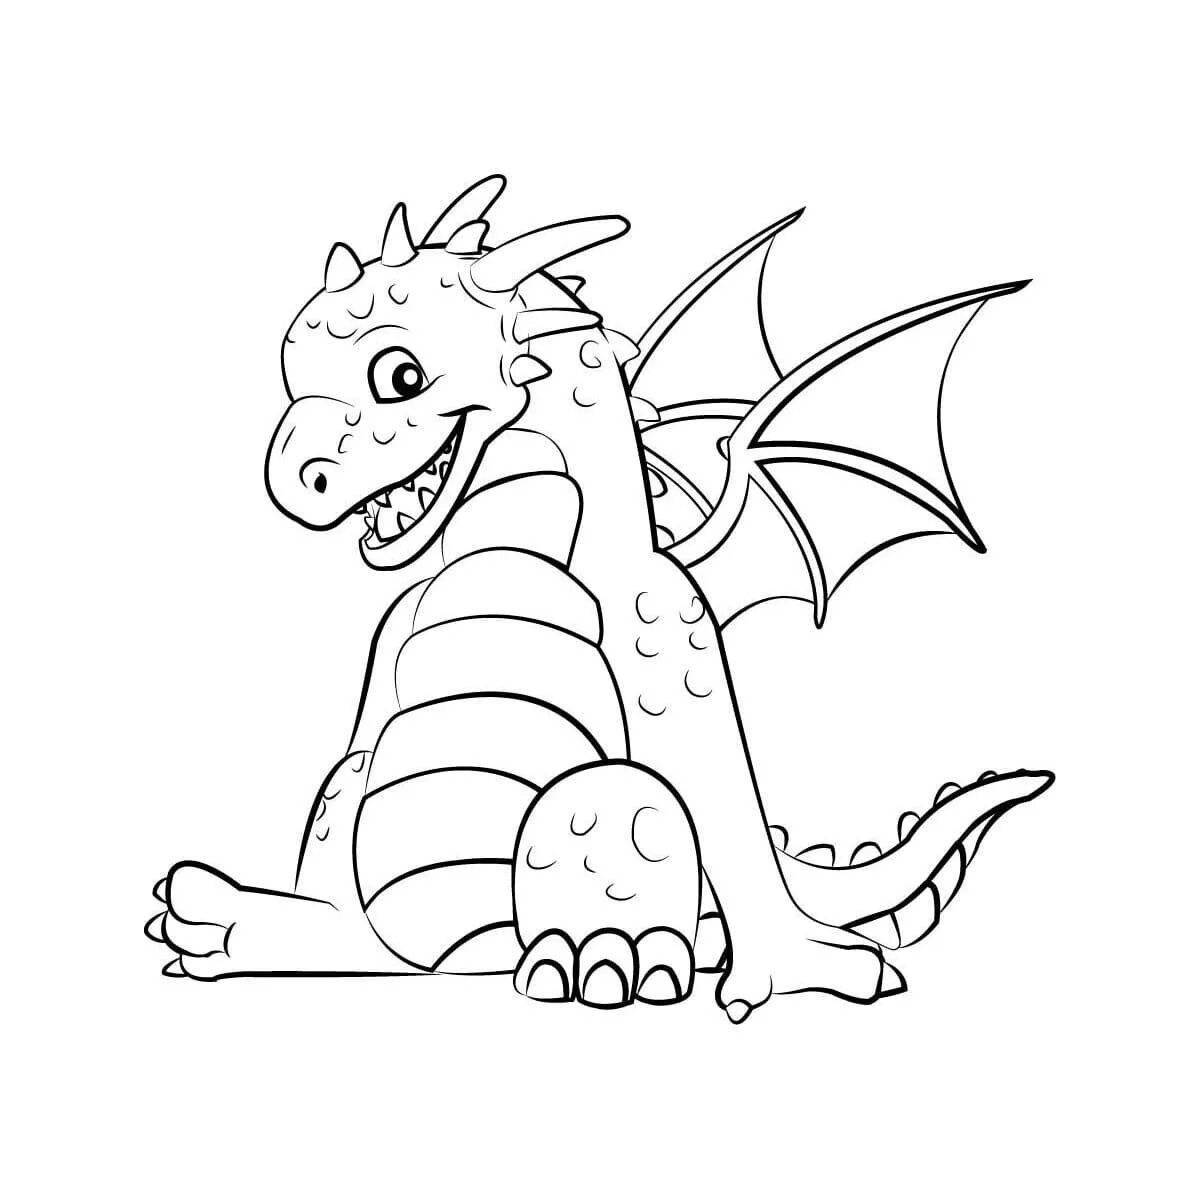 Royal coloring dragons for boys